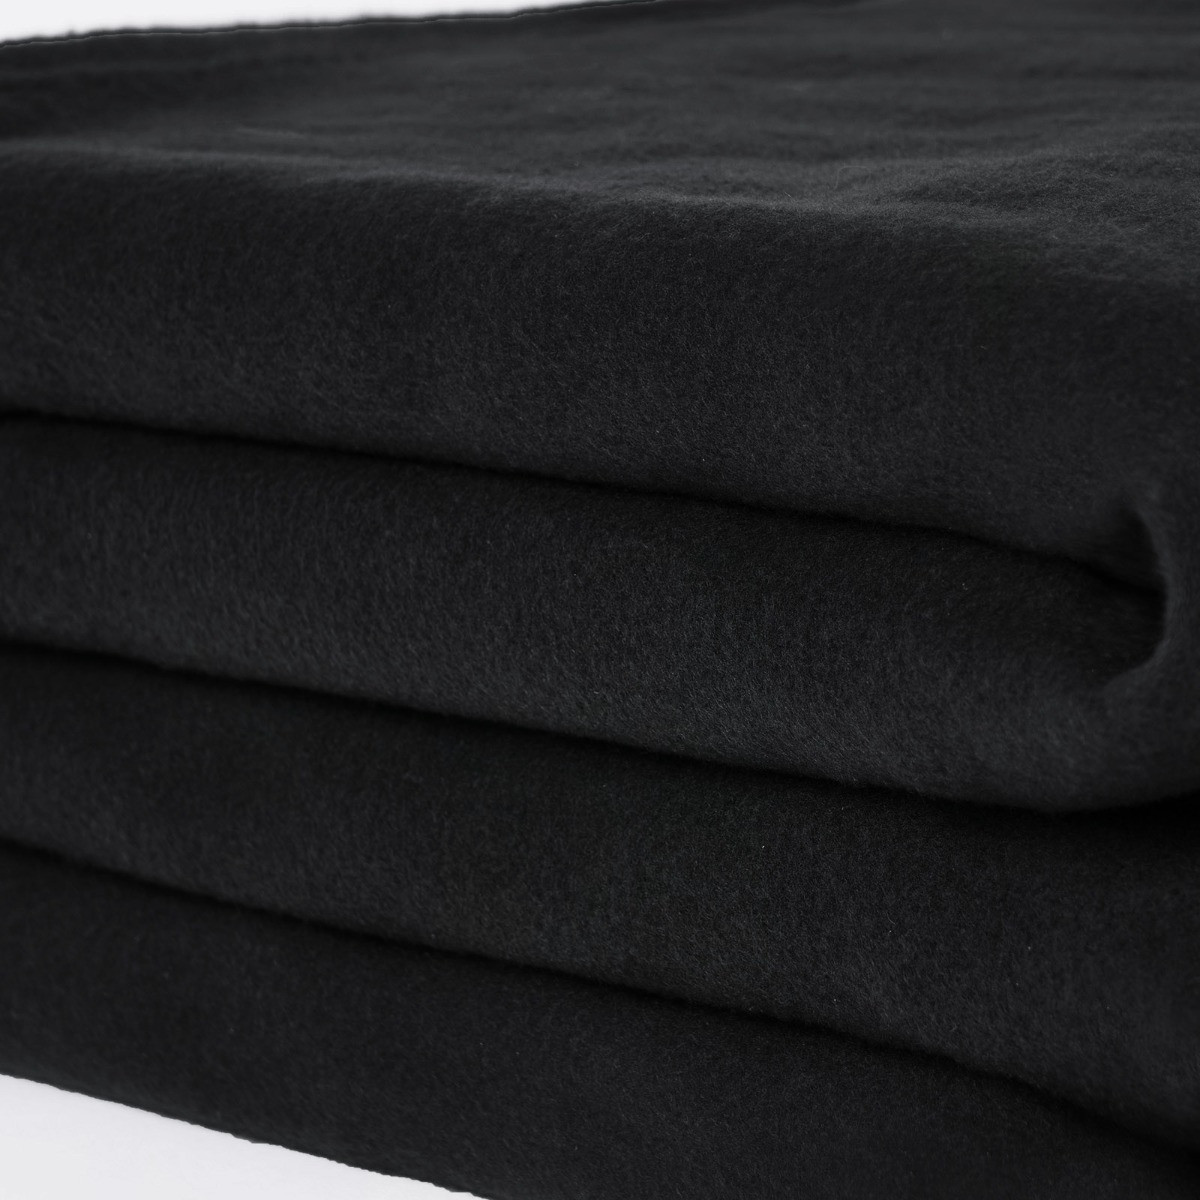 Dreamscene Plain Fleece Throw, Black - 80 x 95 inches>